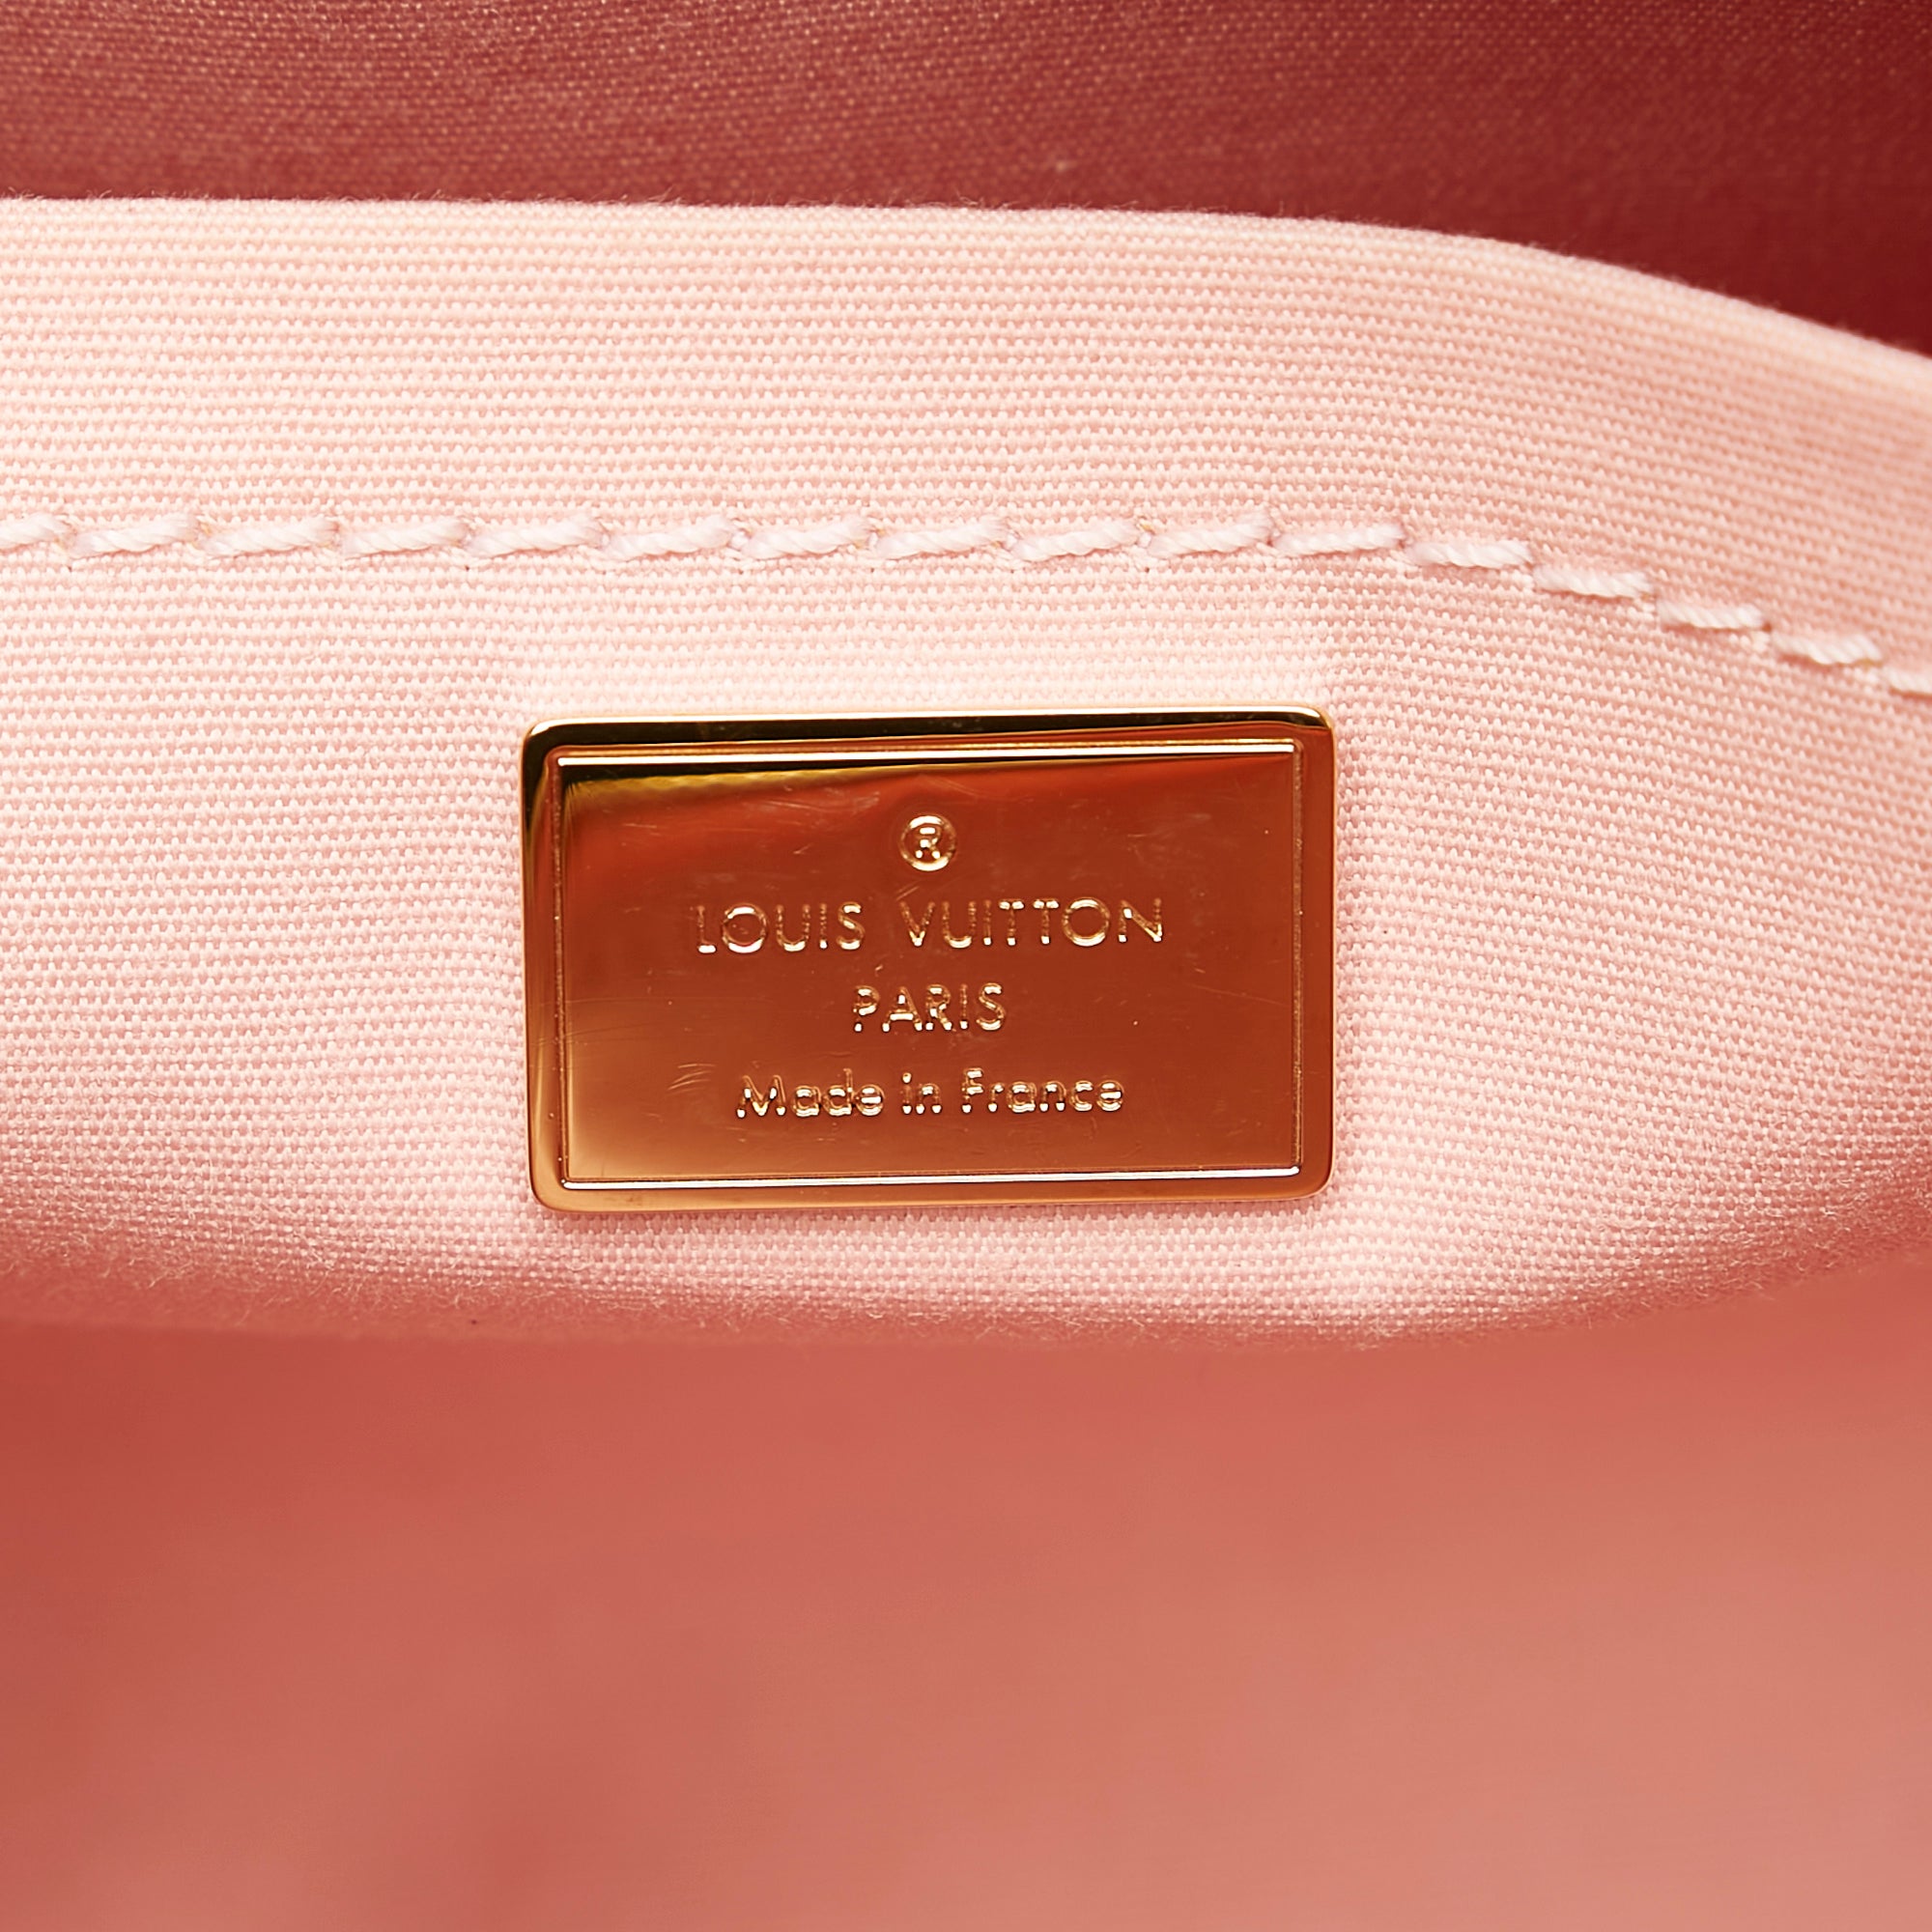 Louis Vuitton Santa Monica Handbag in Red